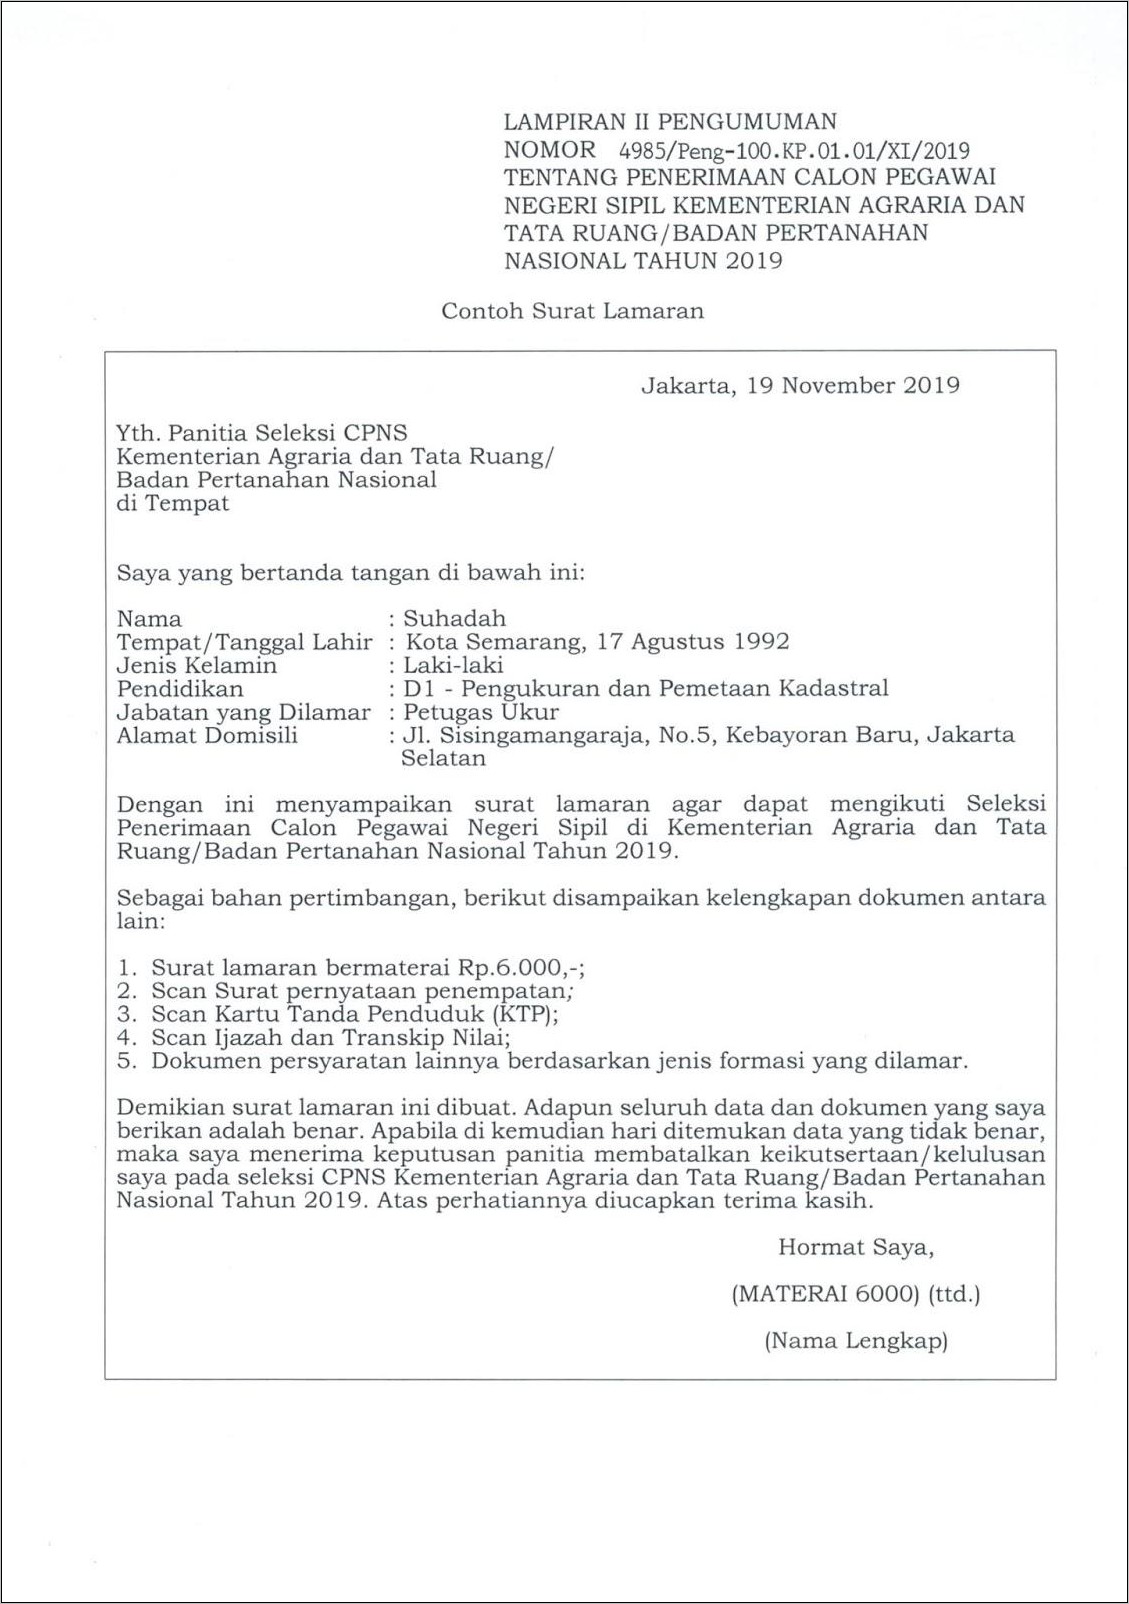 Contoh Surat Lamaran Ppnpn Kementerian Agraria Makassar